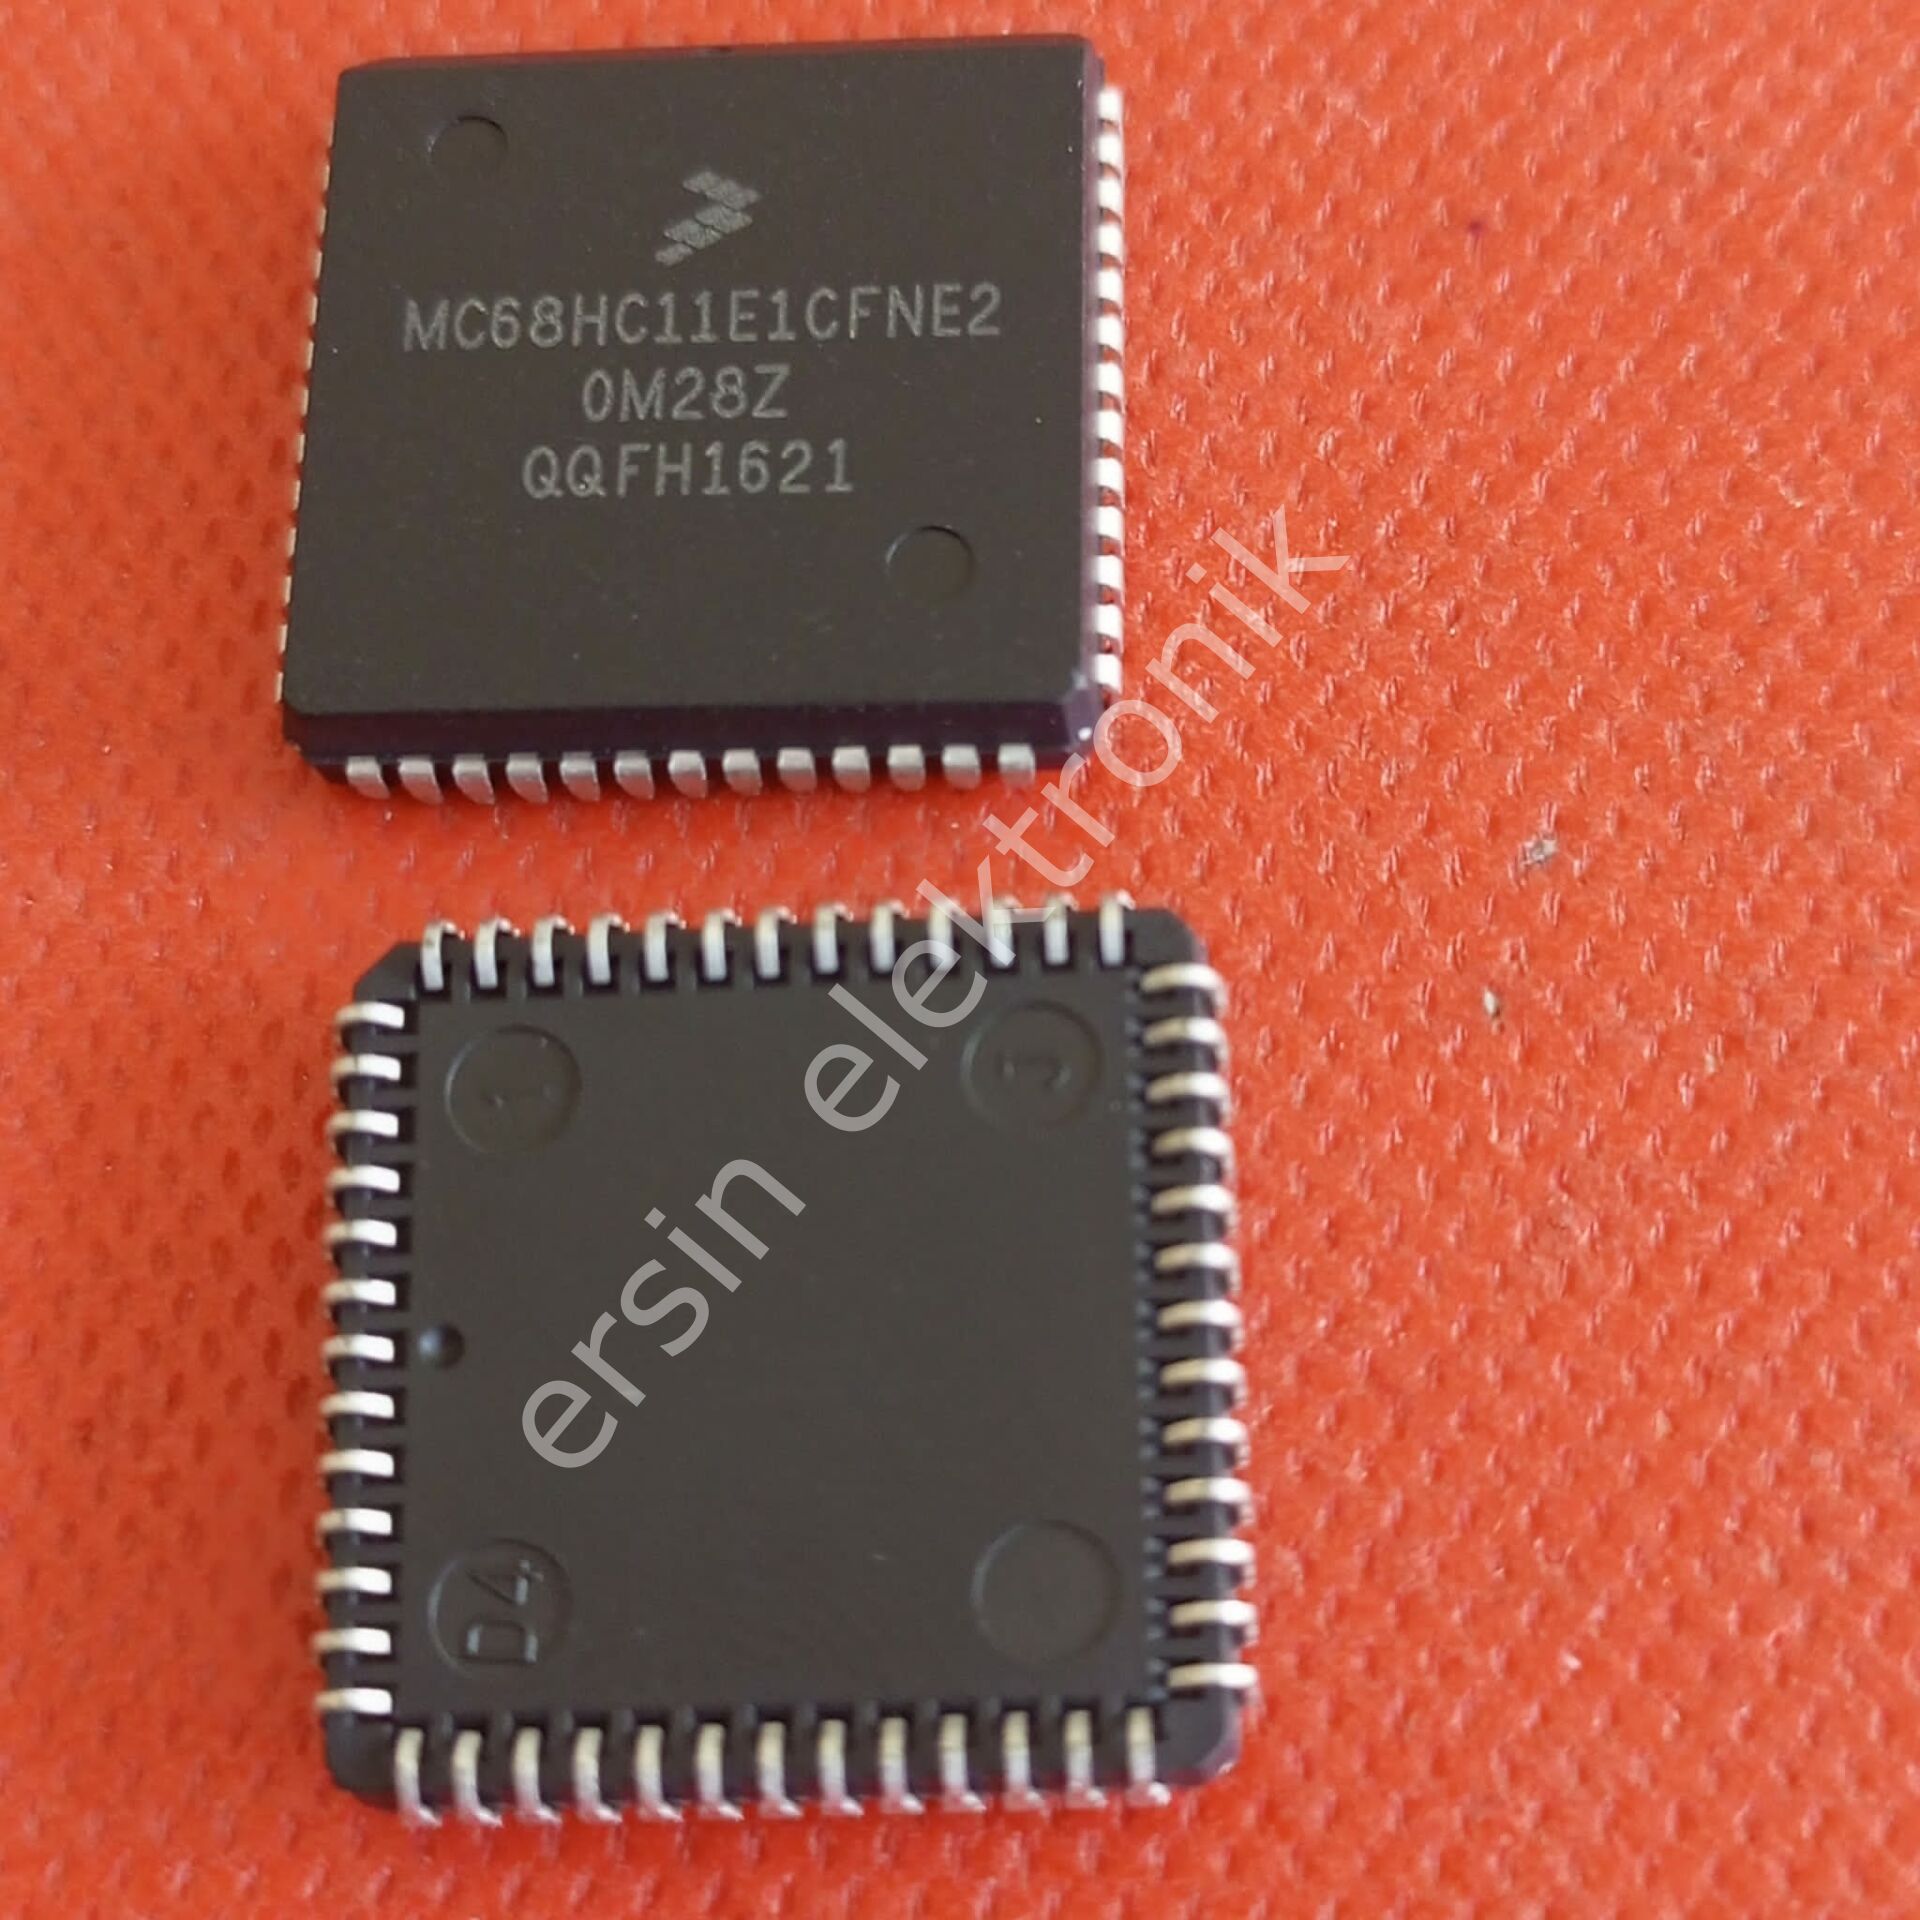 MC68HC11 PLCC (MC68HC11E1CFNE2) 52 PIN